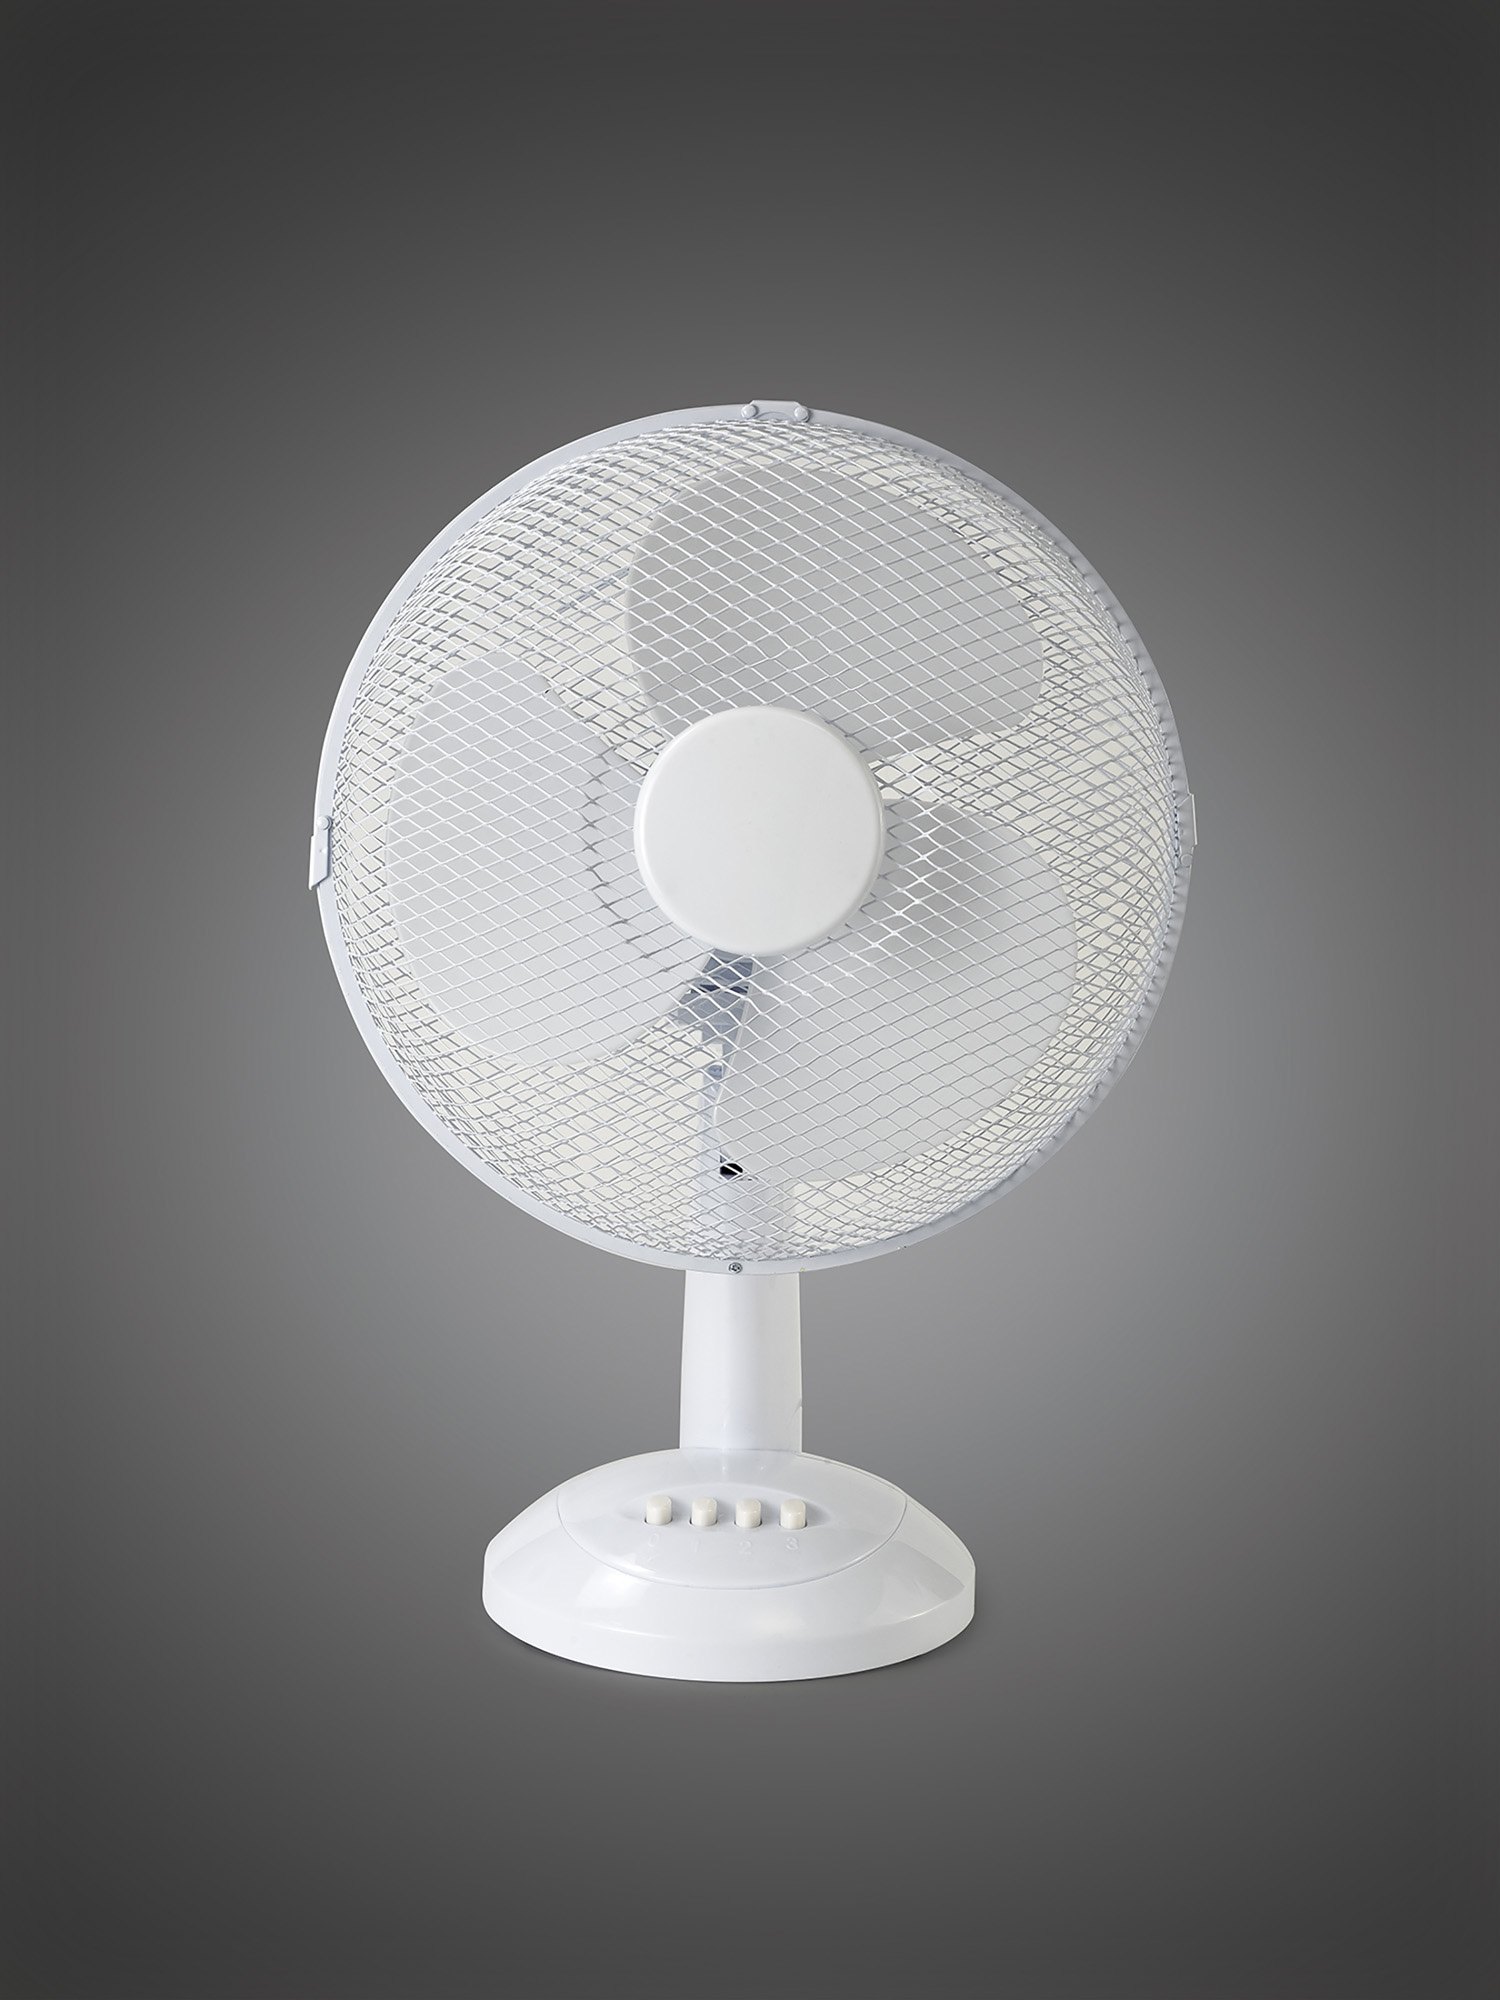 Airo Heating, Cooling & Ventilation Deco Desk & Floor Fans